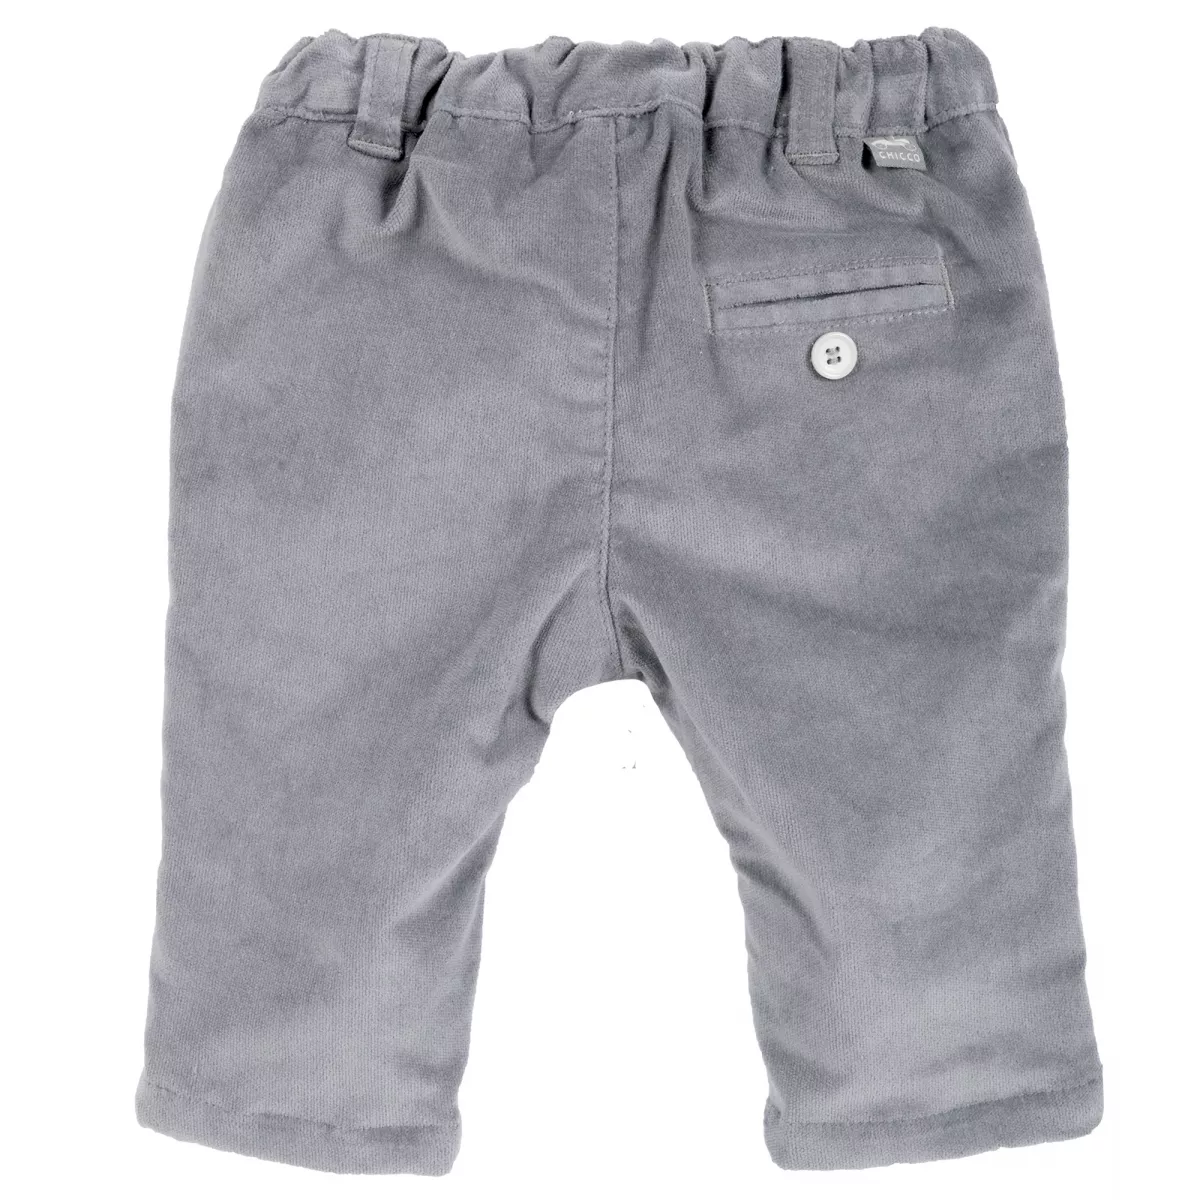 Pantalon copii Chicco, gri inchis, 86